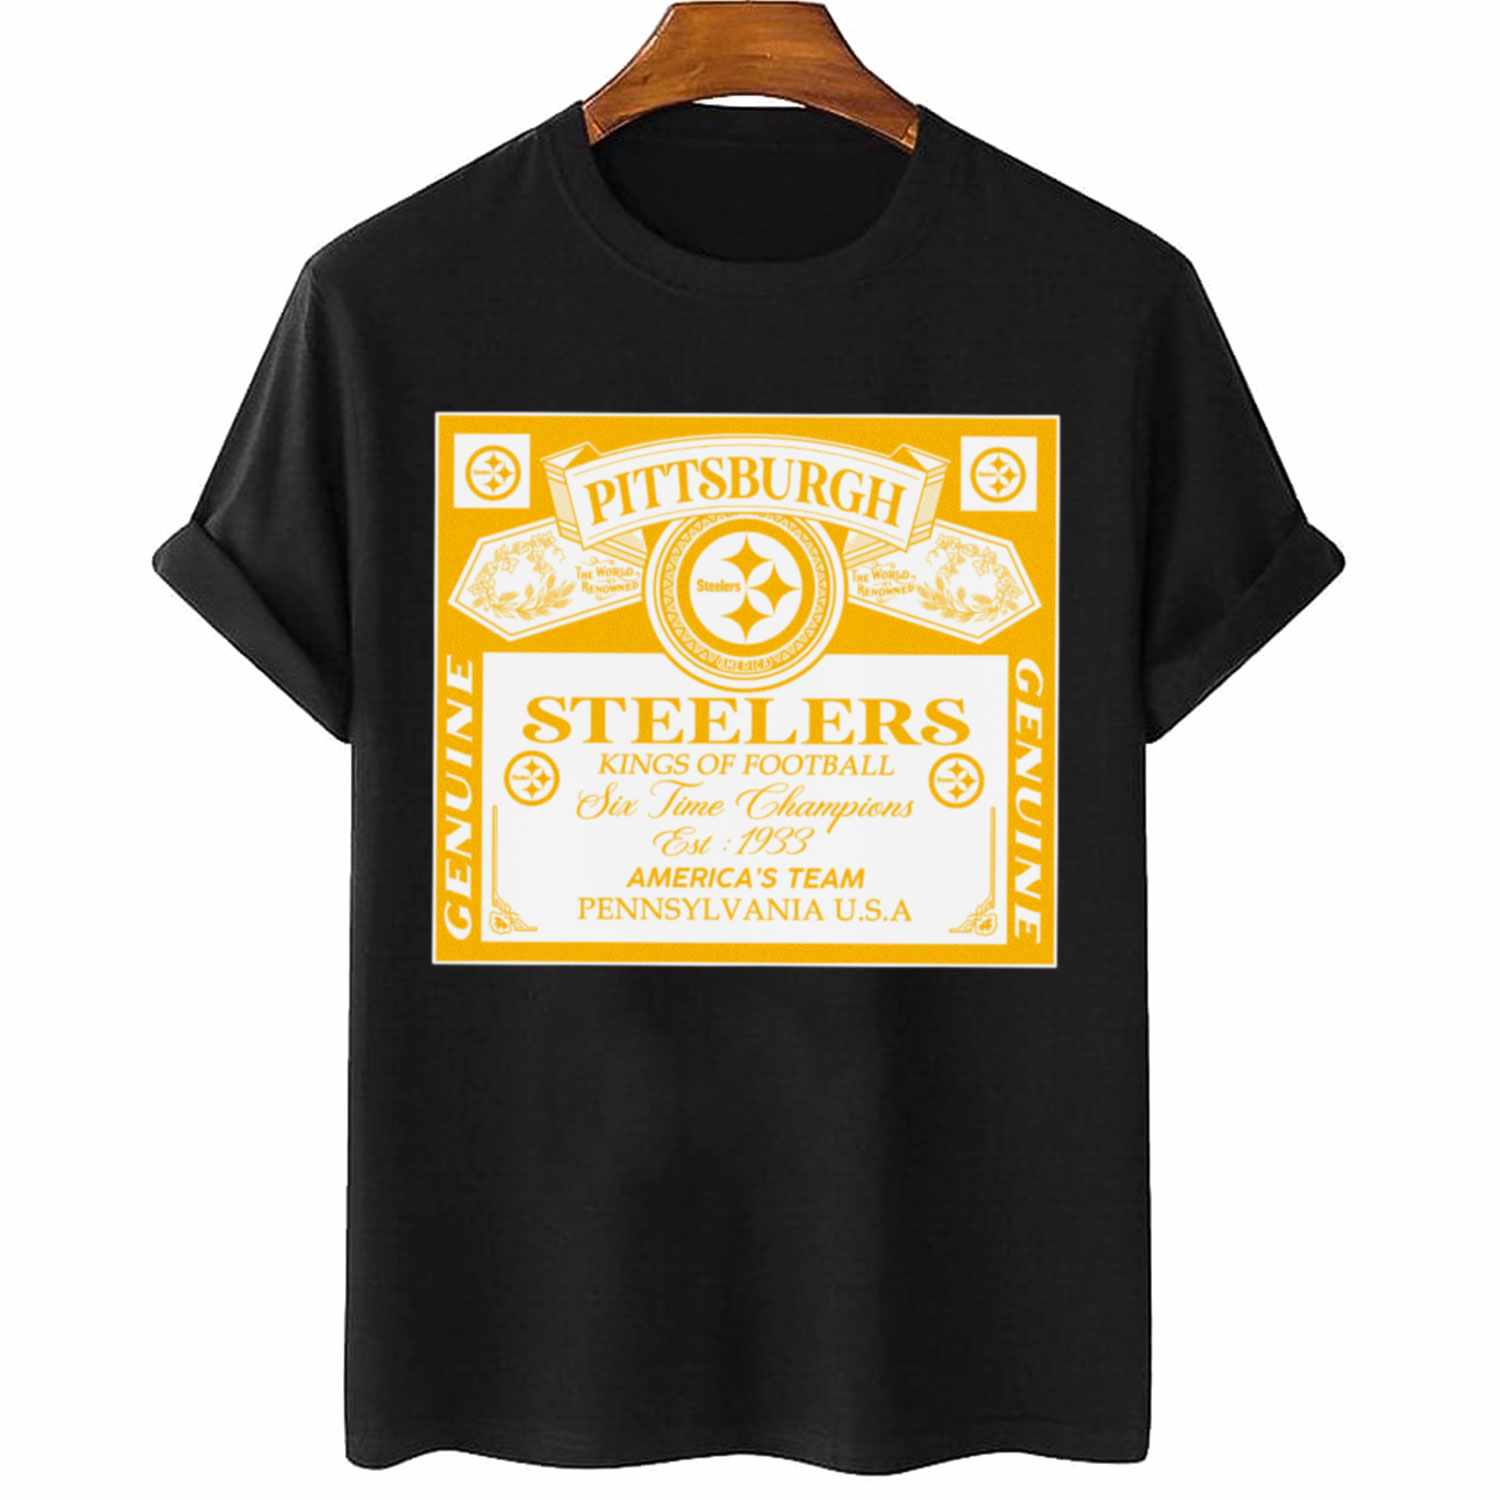 Reskyd Vedhæft til Efterligning Kings Of Football Funny Budweiser Genuine Pittsburgh Steelers T-Shirt -  Cruel Ball